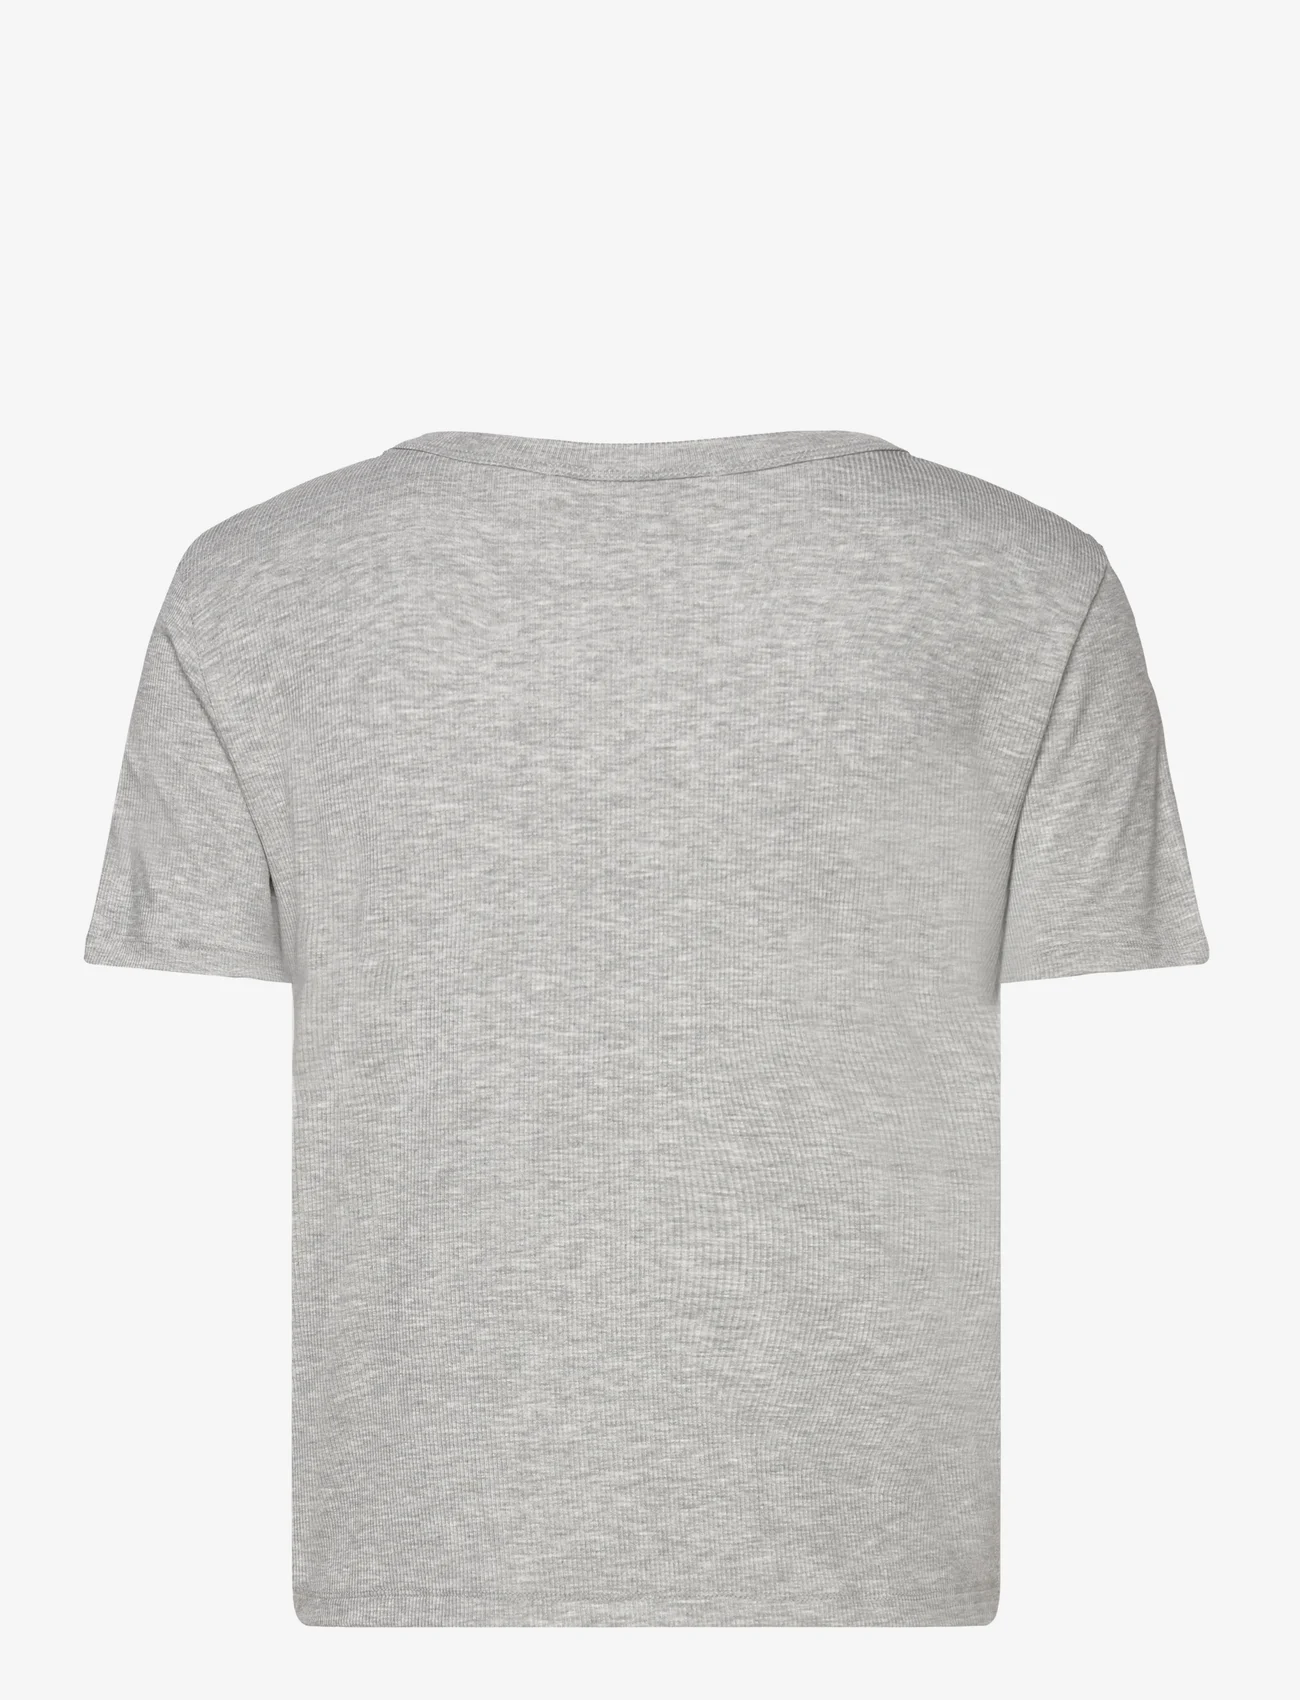 Sofie Schnoor - T-Shirt - t-shirts - grey mel - 1